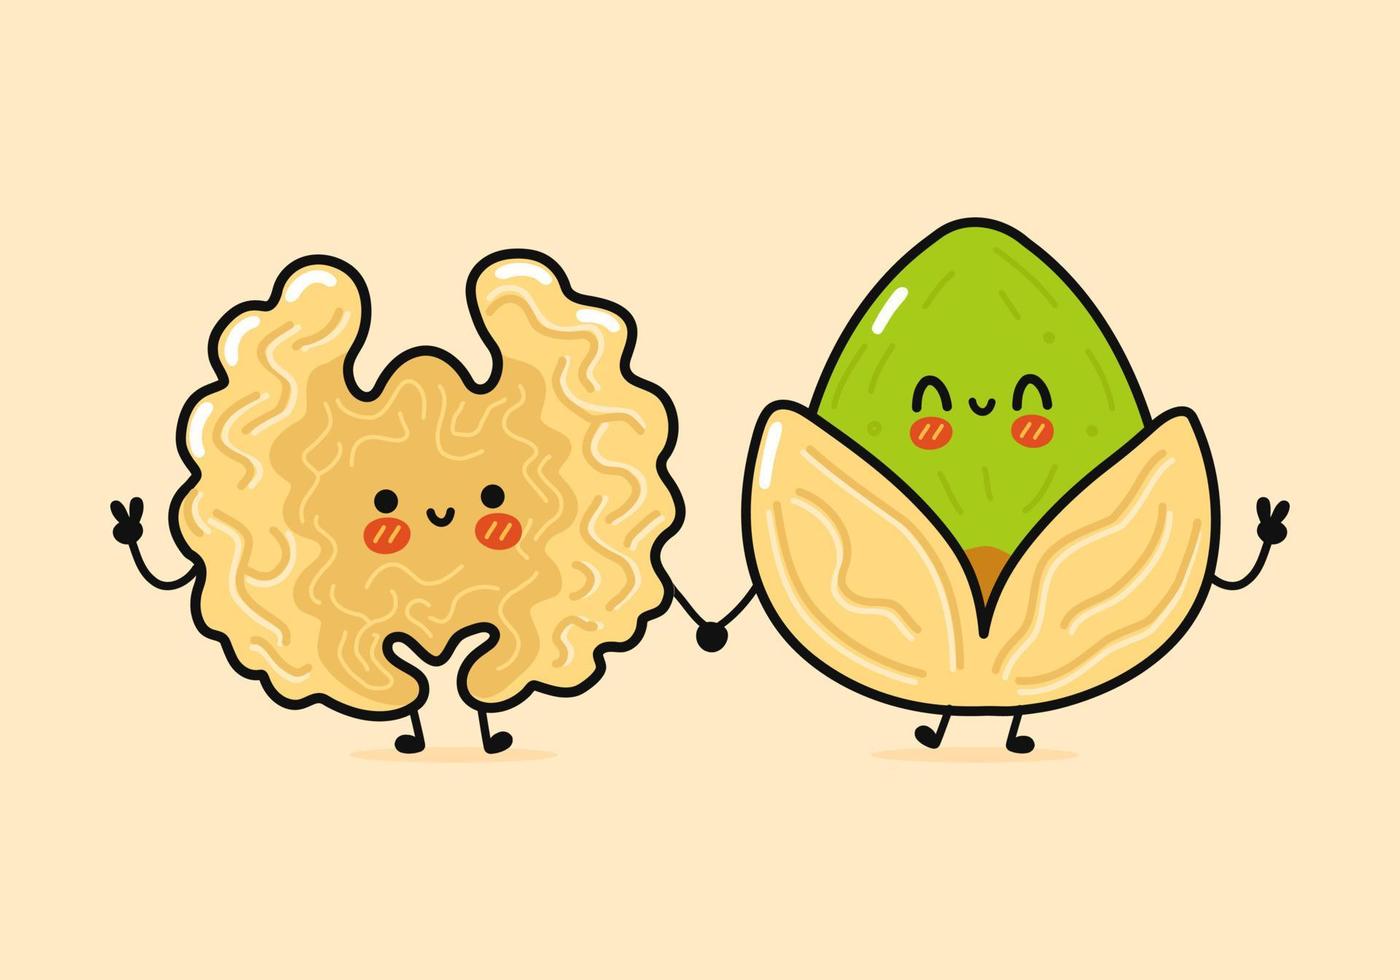 Cute, funny happy walnut and pistachios character. Vector hand drawn cartoon kawaii characters, illustration icon. Funny cartoon walnut and pistachios friends